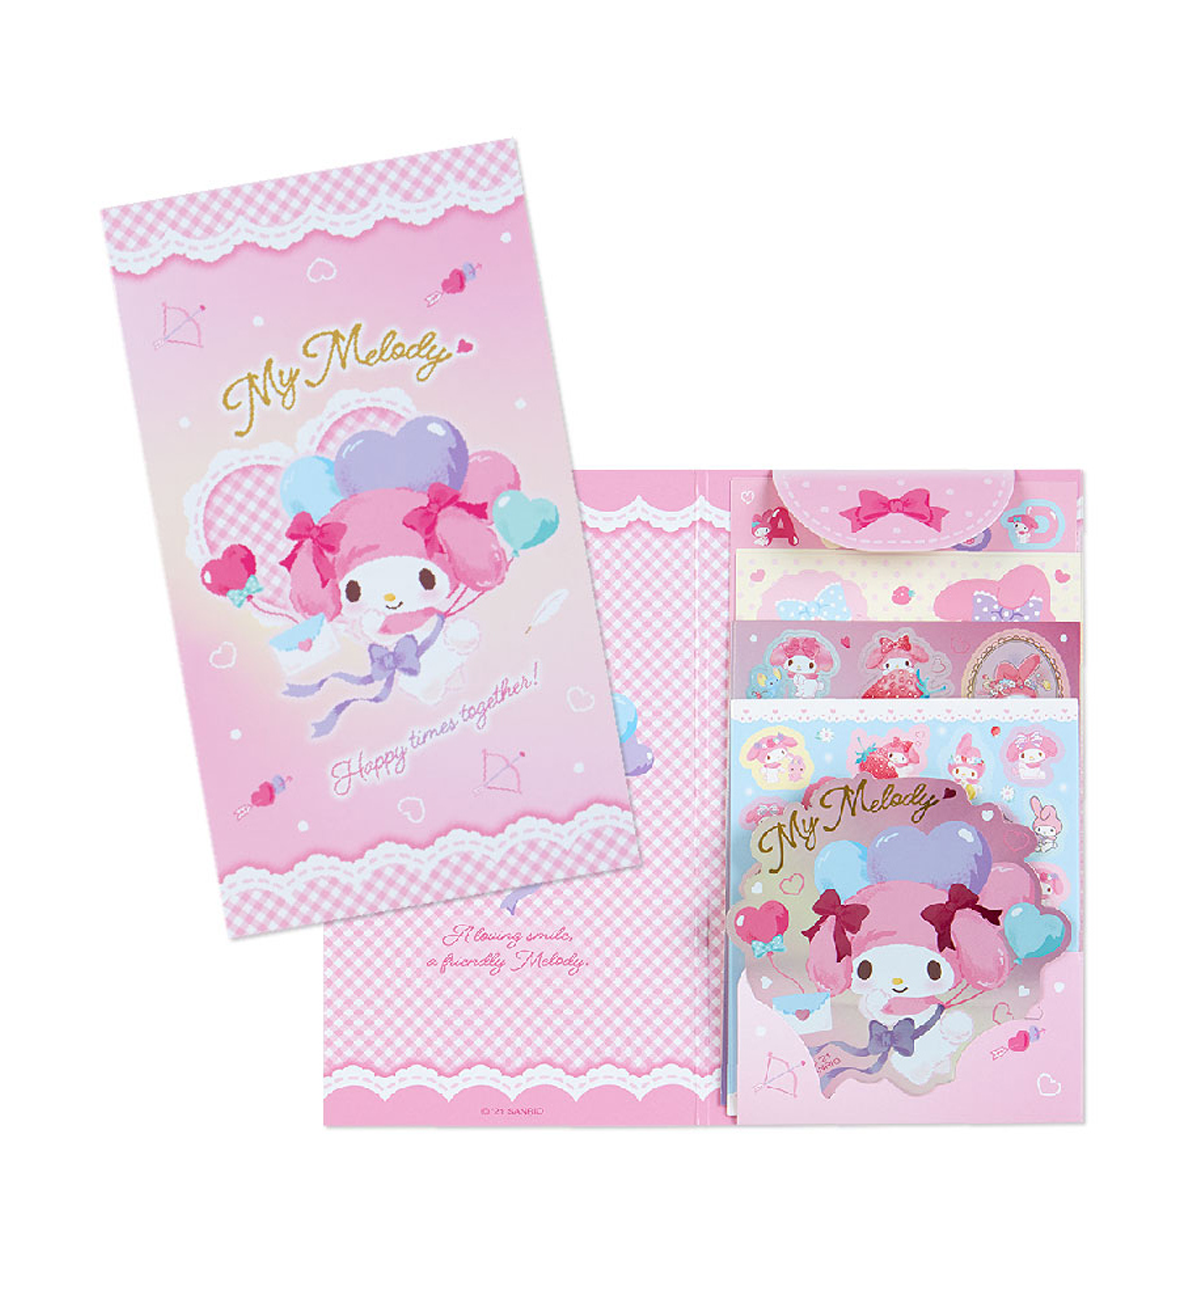 Japan Sanrio Volume Sticker Set - Hello Kitty